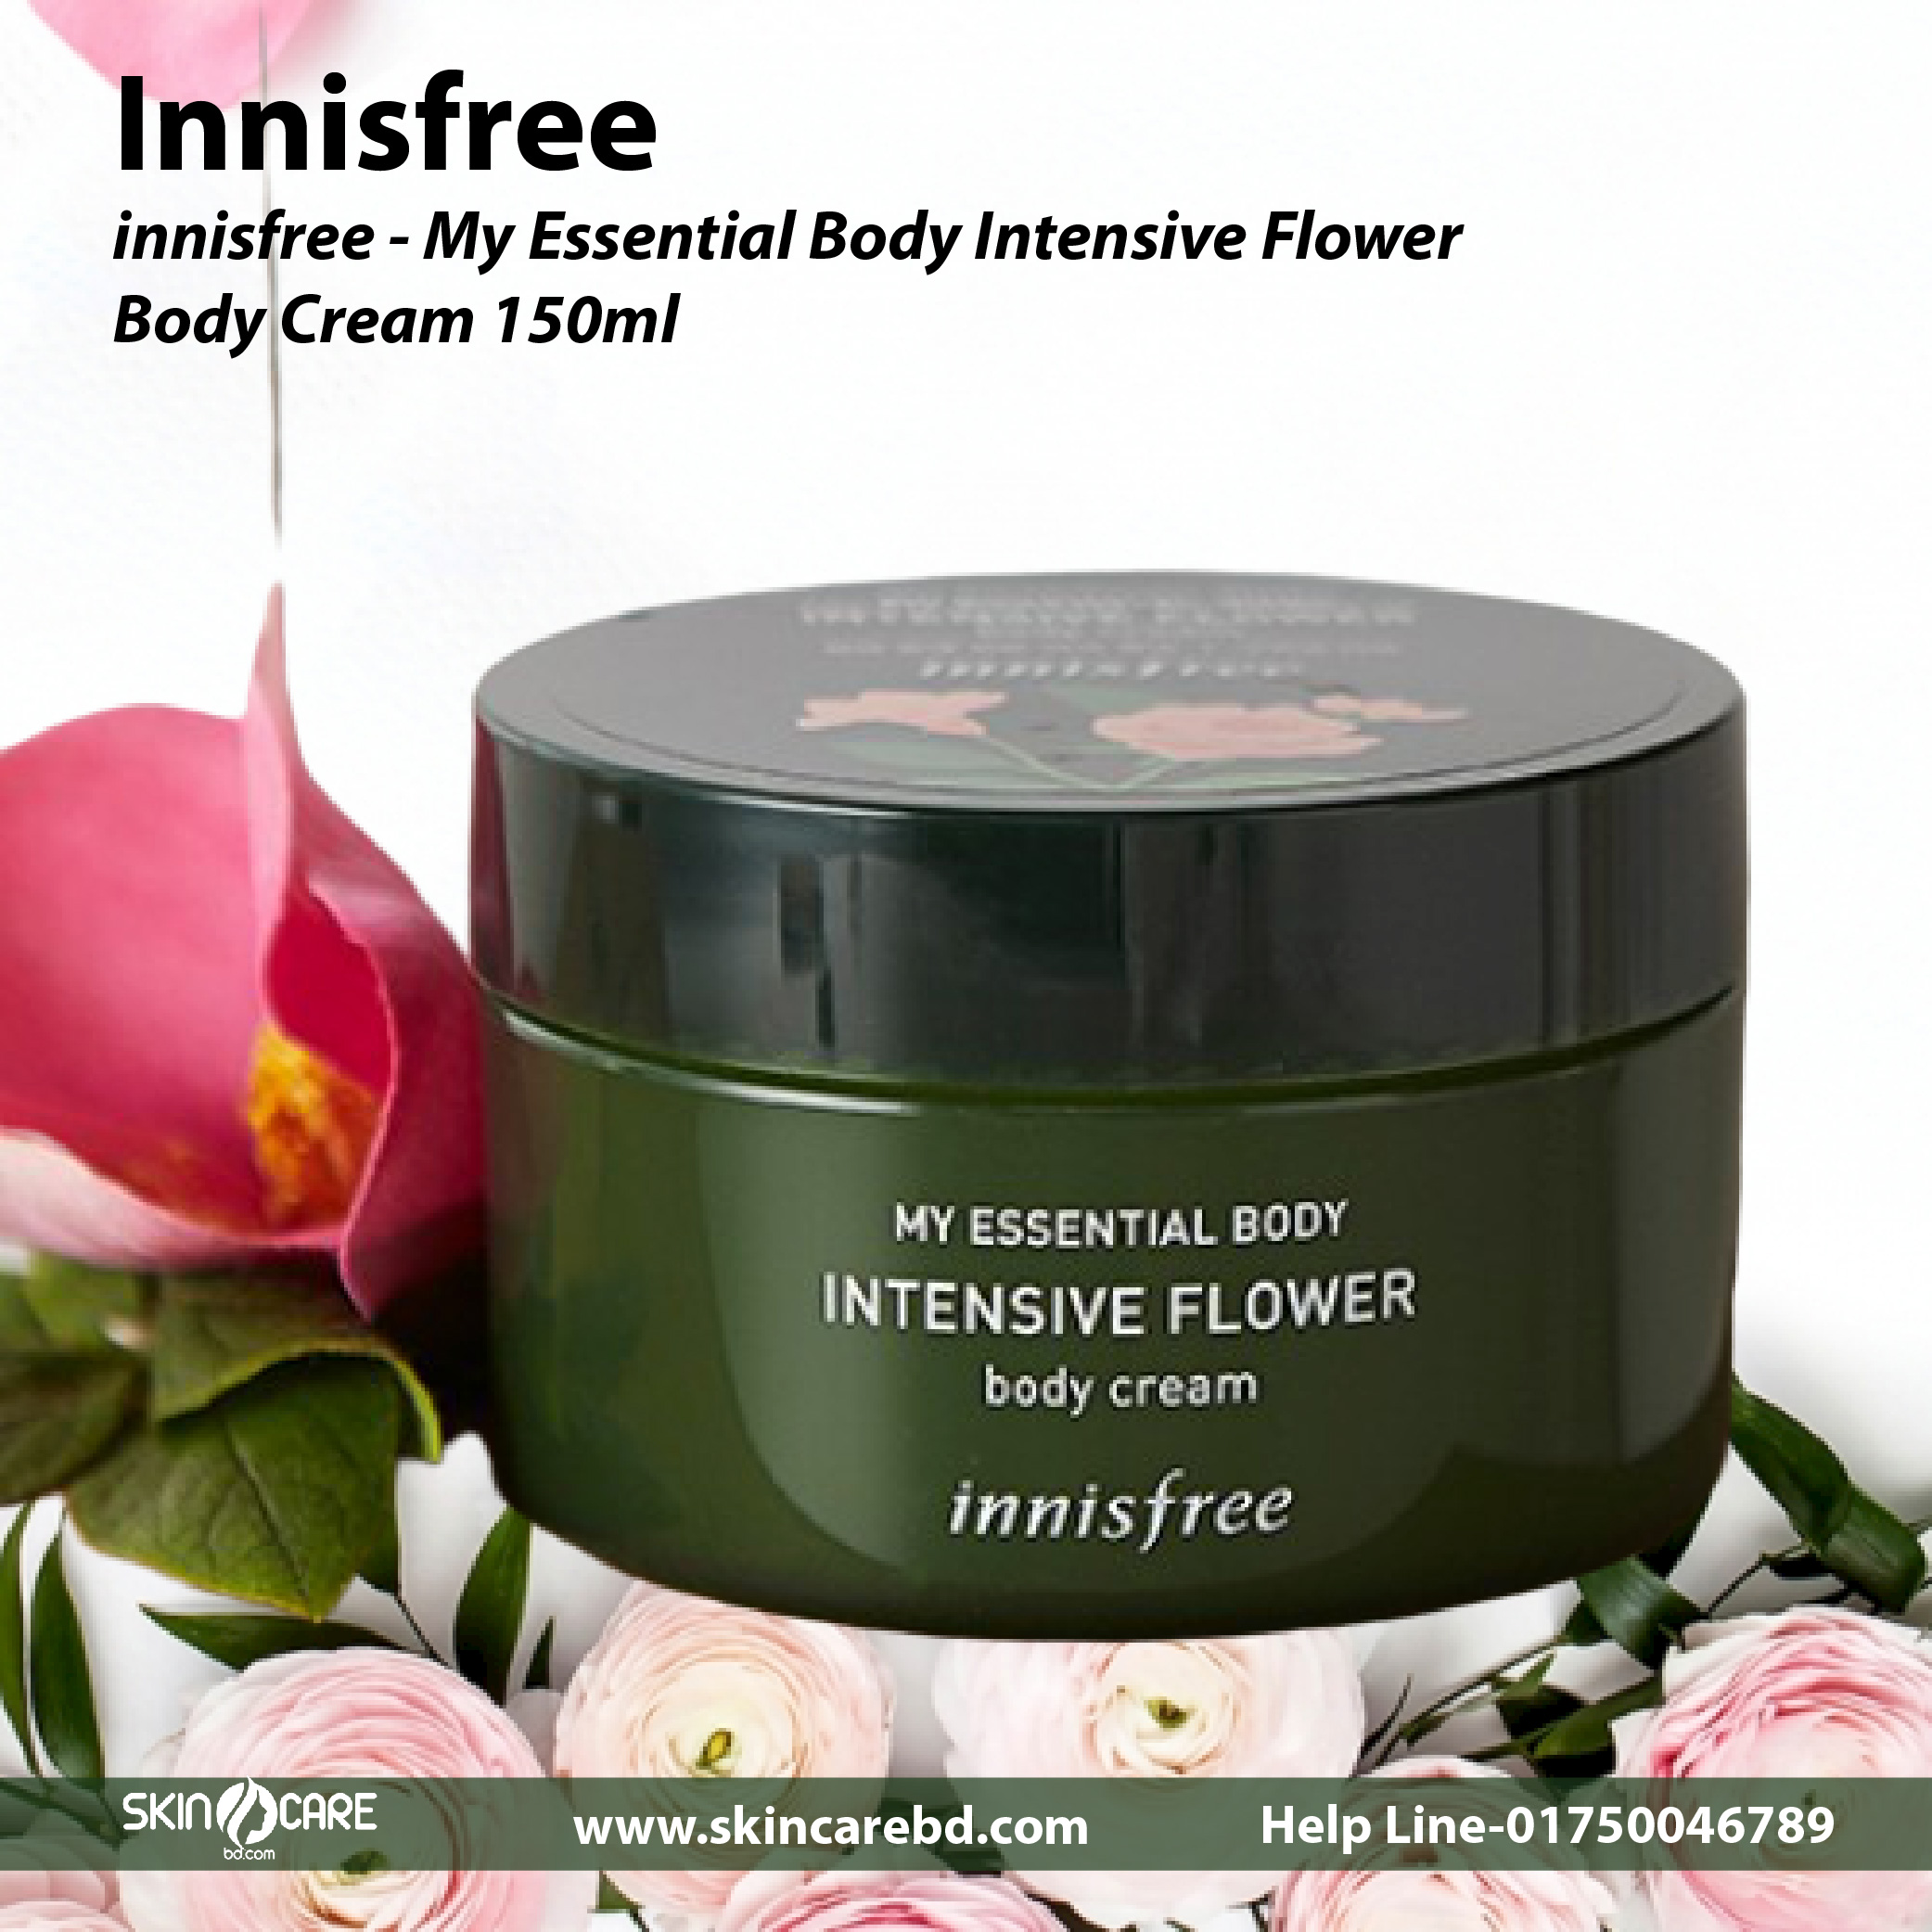 Innisfree My Essential Body Intensive Flower Body Cream 150ml - Skin